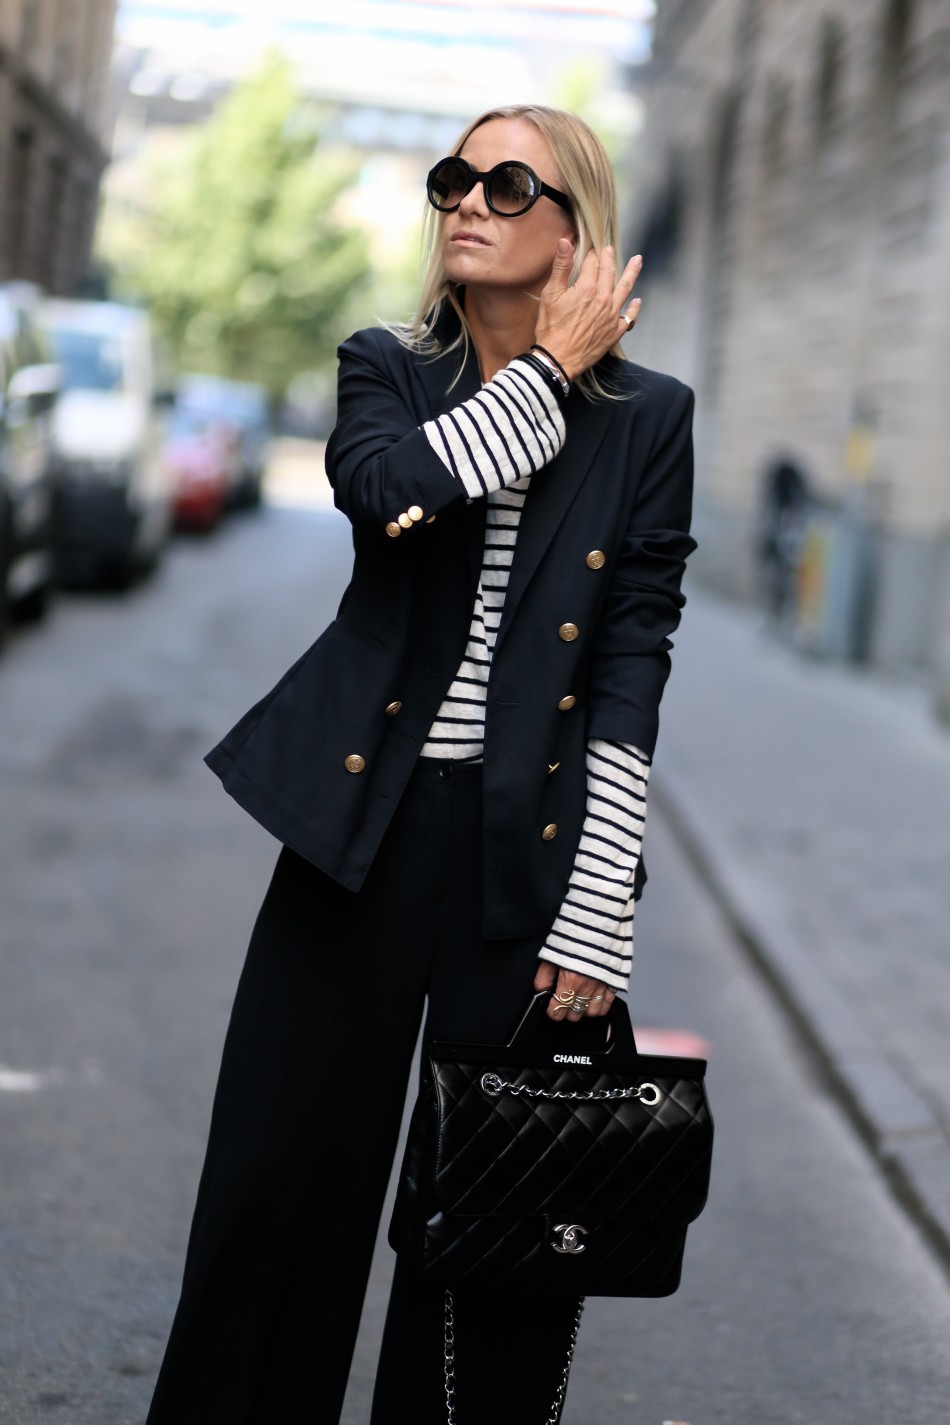 CelineAagaard in stripes during Stockholm Fashion Week | Envelope